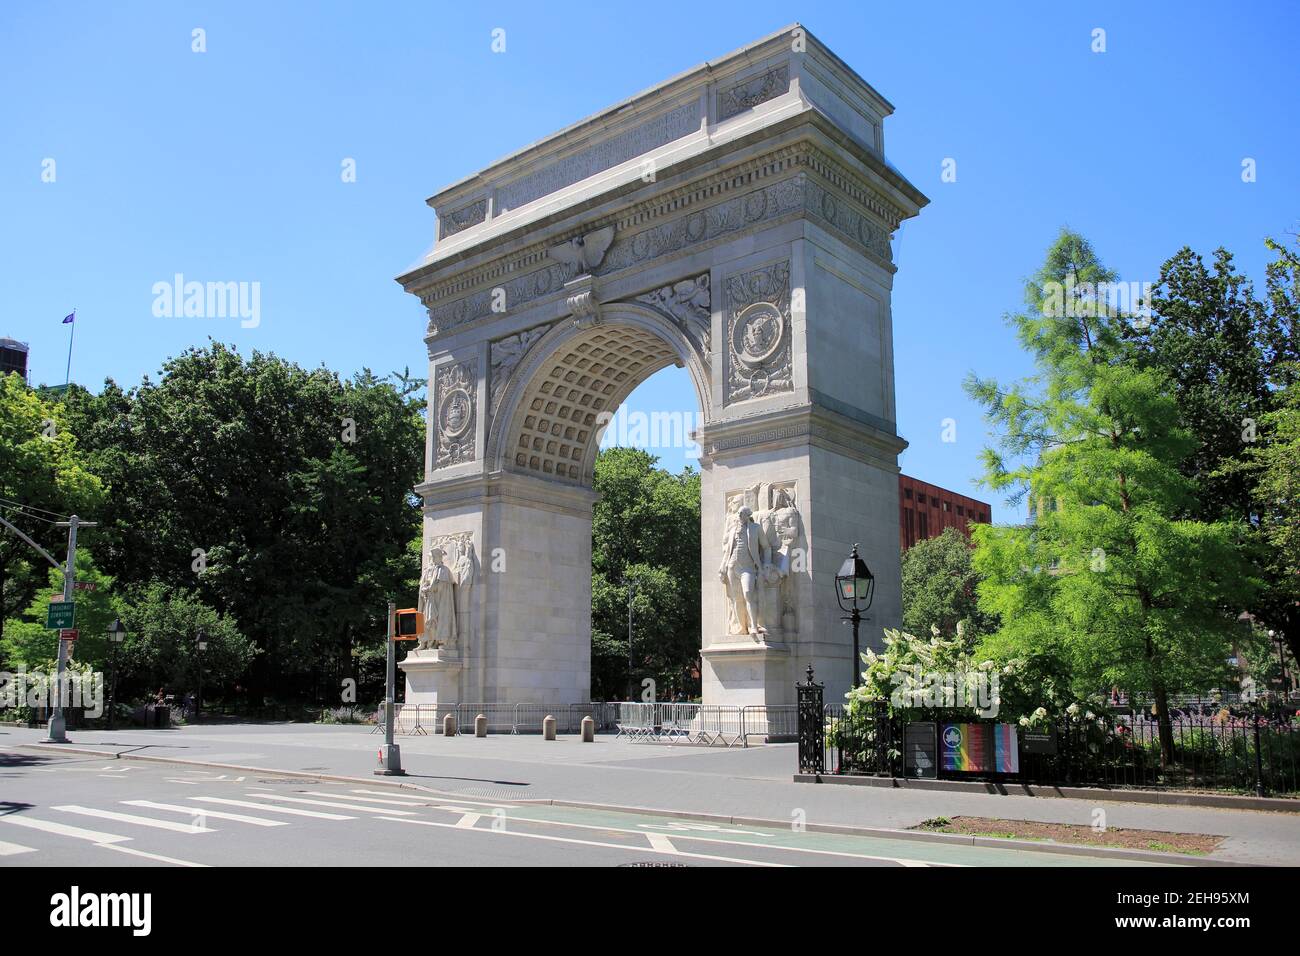 Washington Square Arch, Washington Square Park, Greenwich Village, Manhattan, New York City, USA Stock Photo